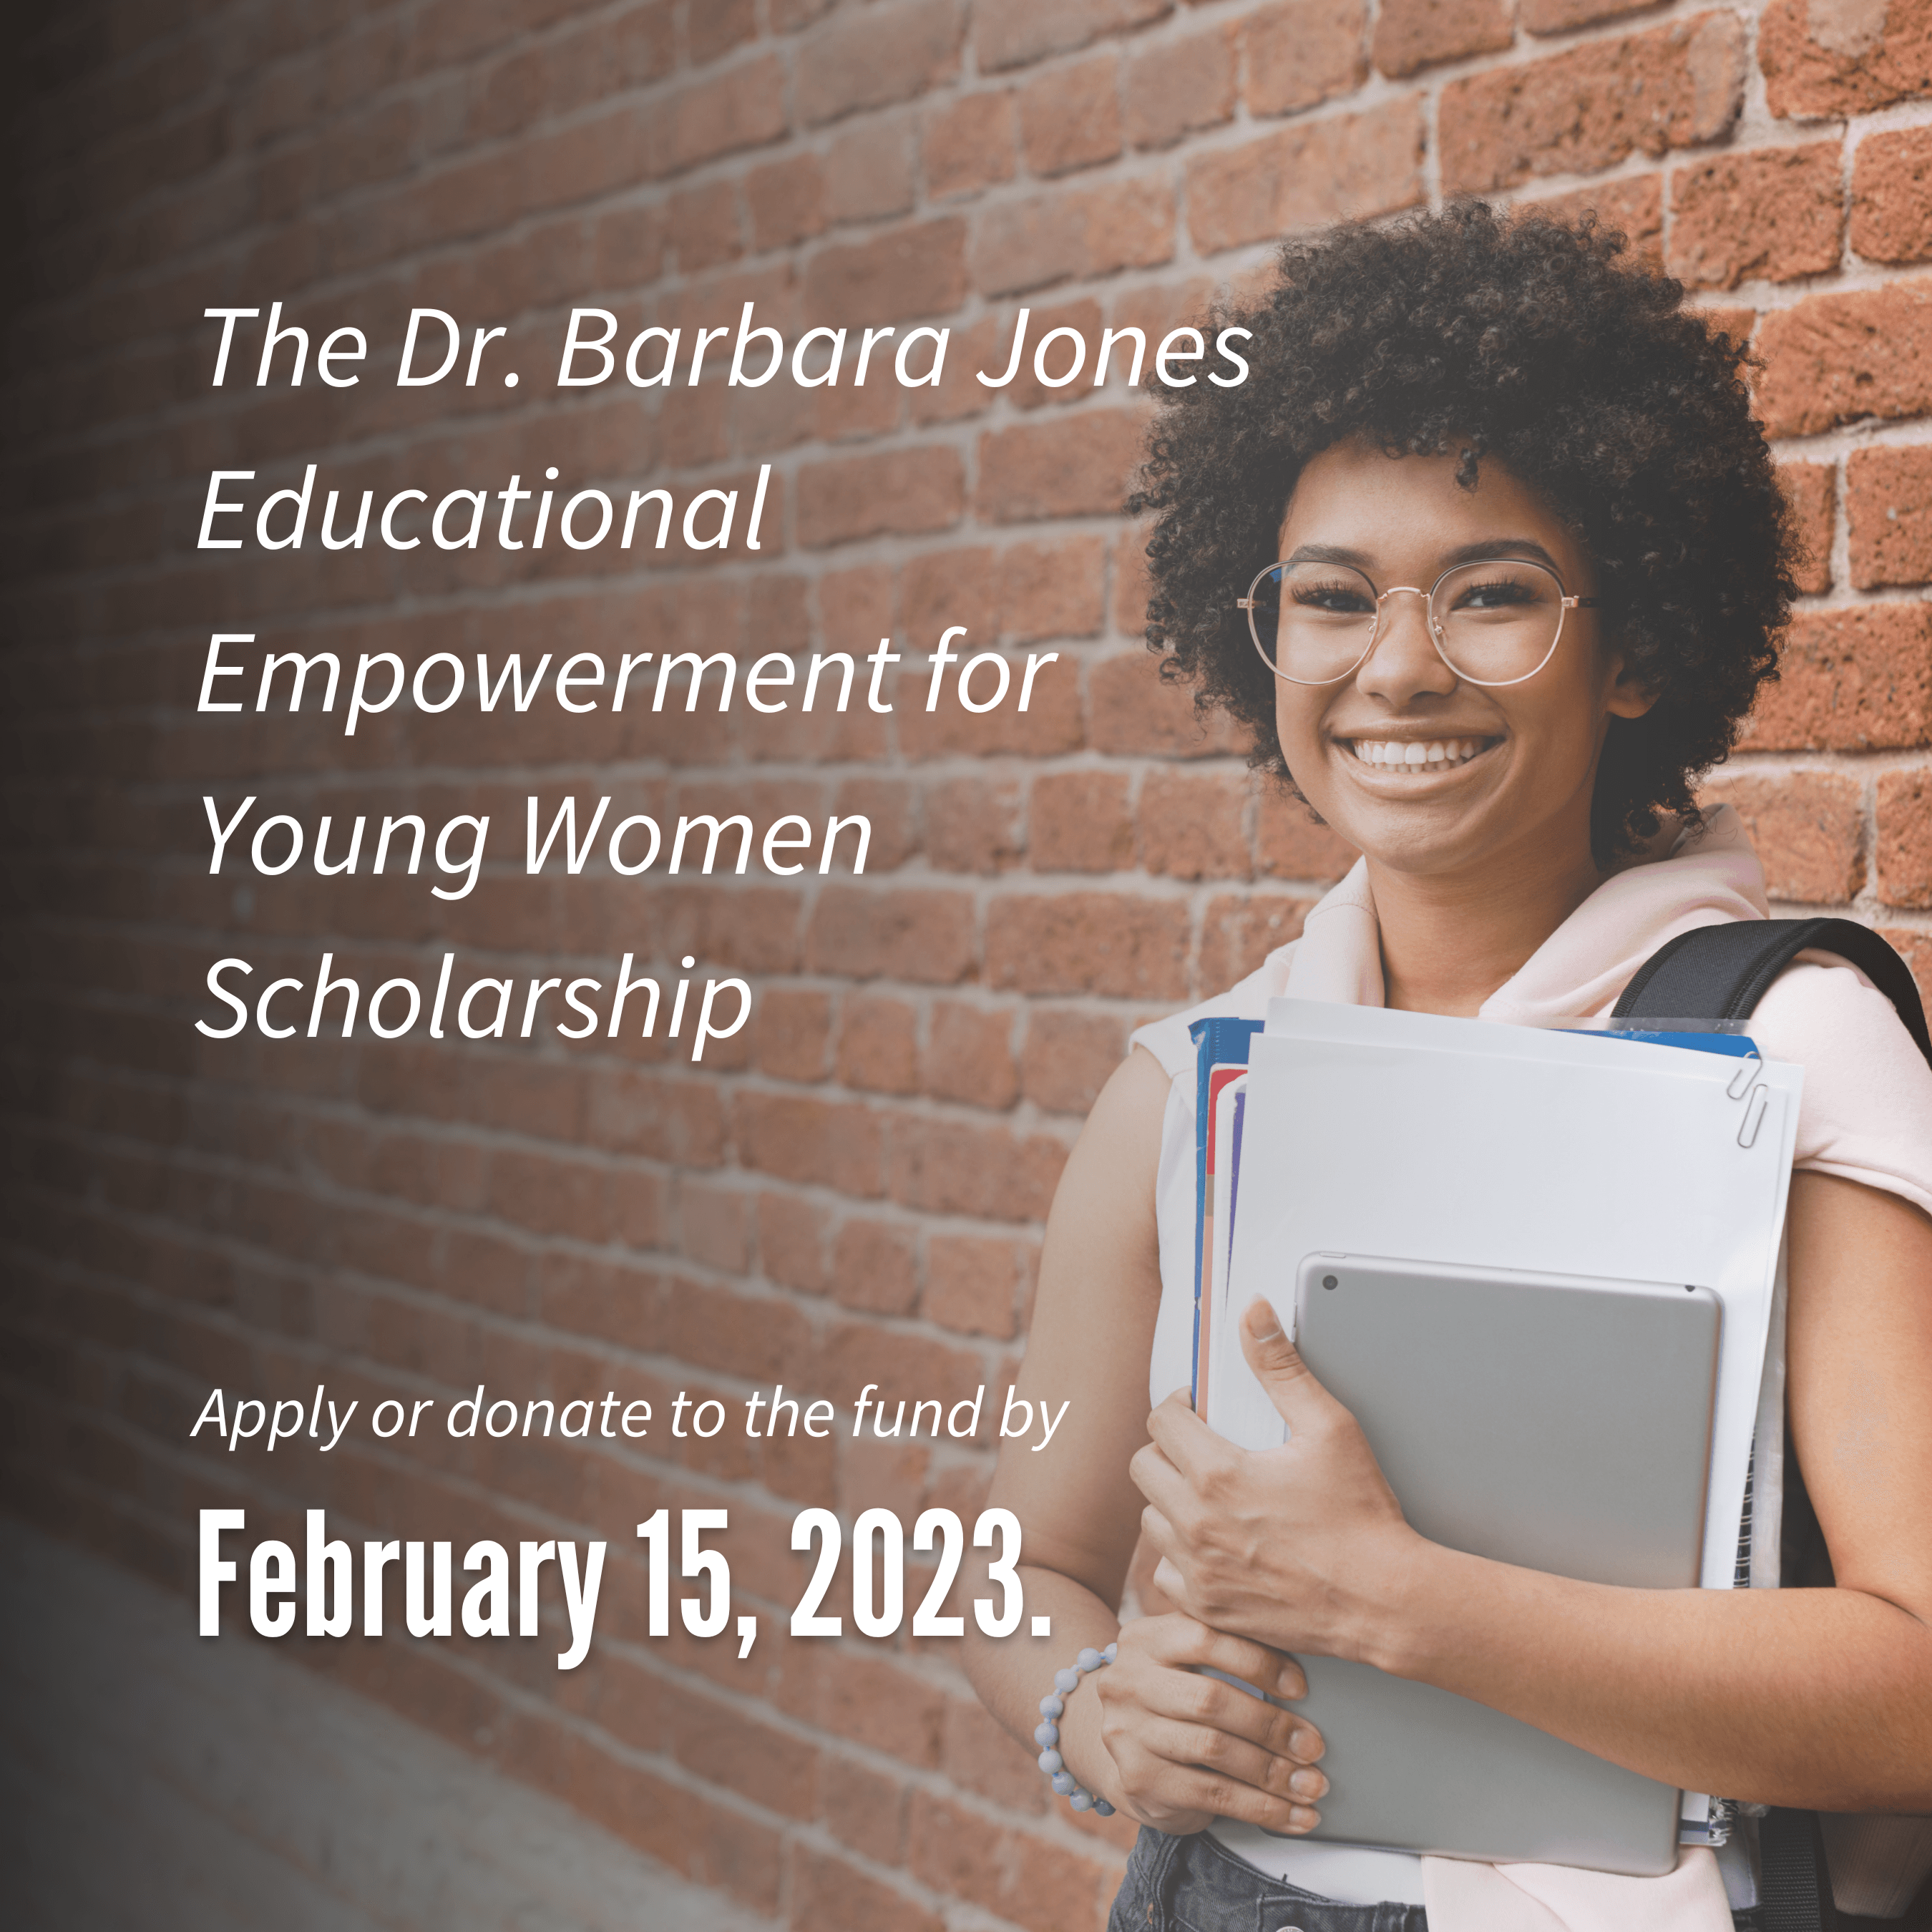 The Dr. Barbara Jones Educational Empowerment for Young Women Scholarship